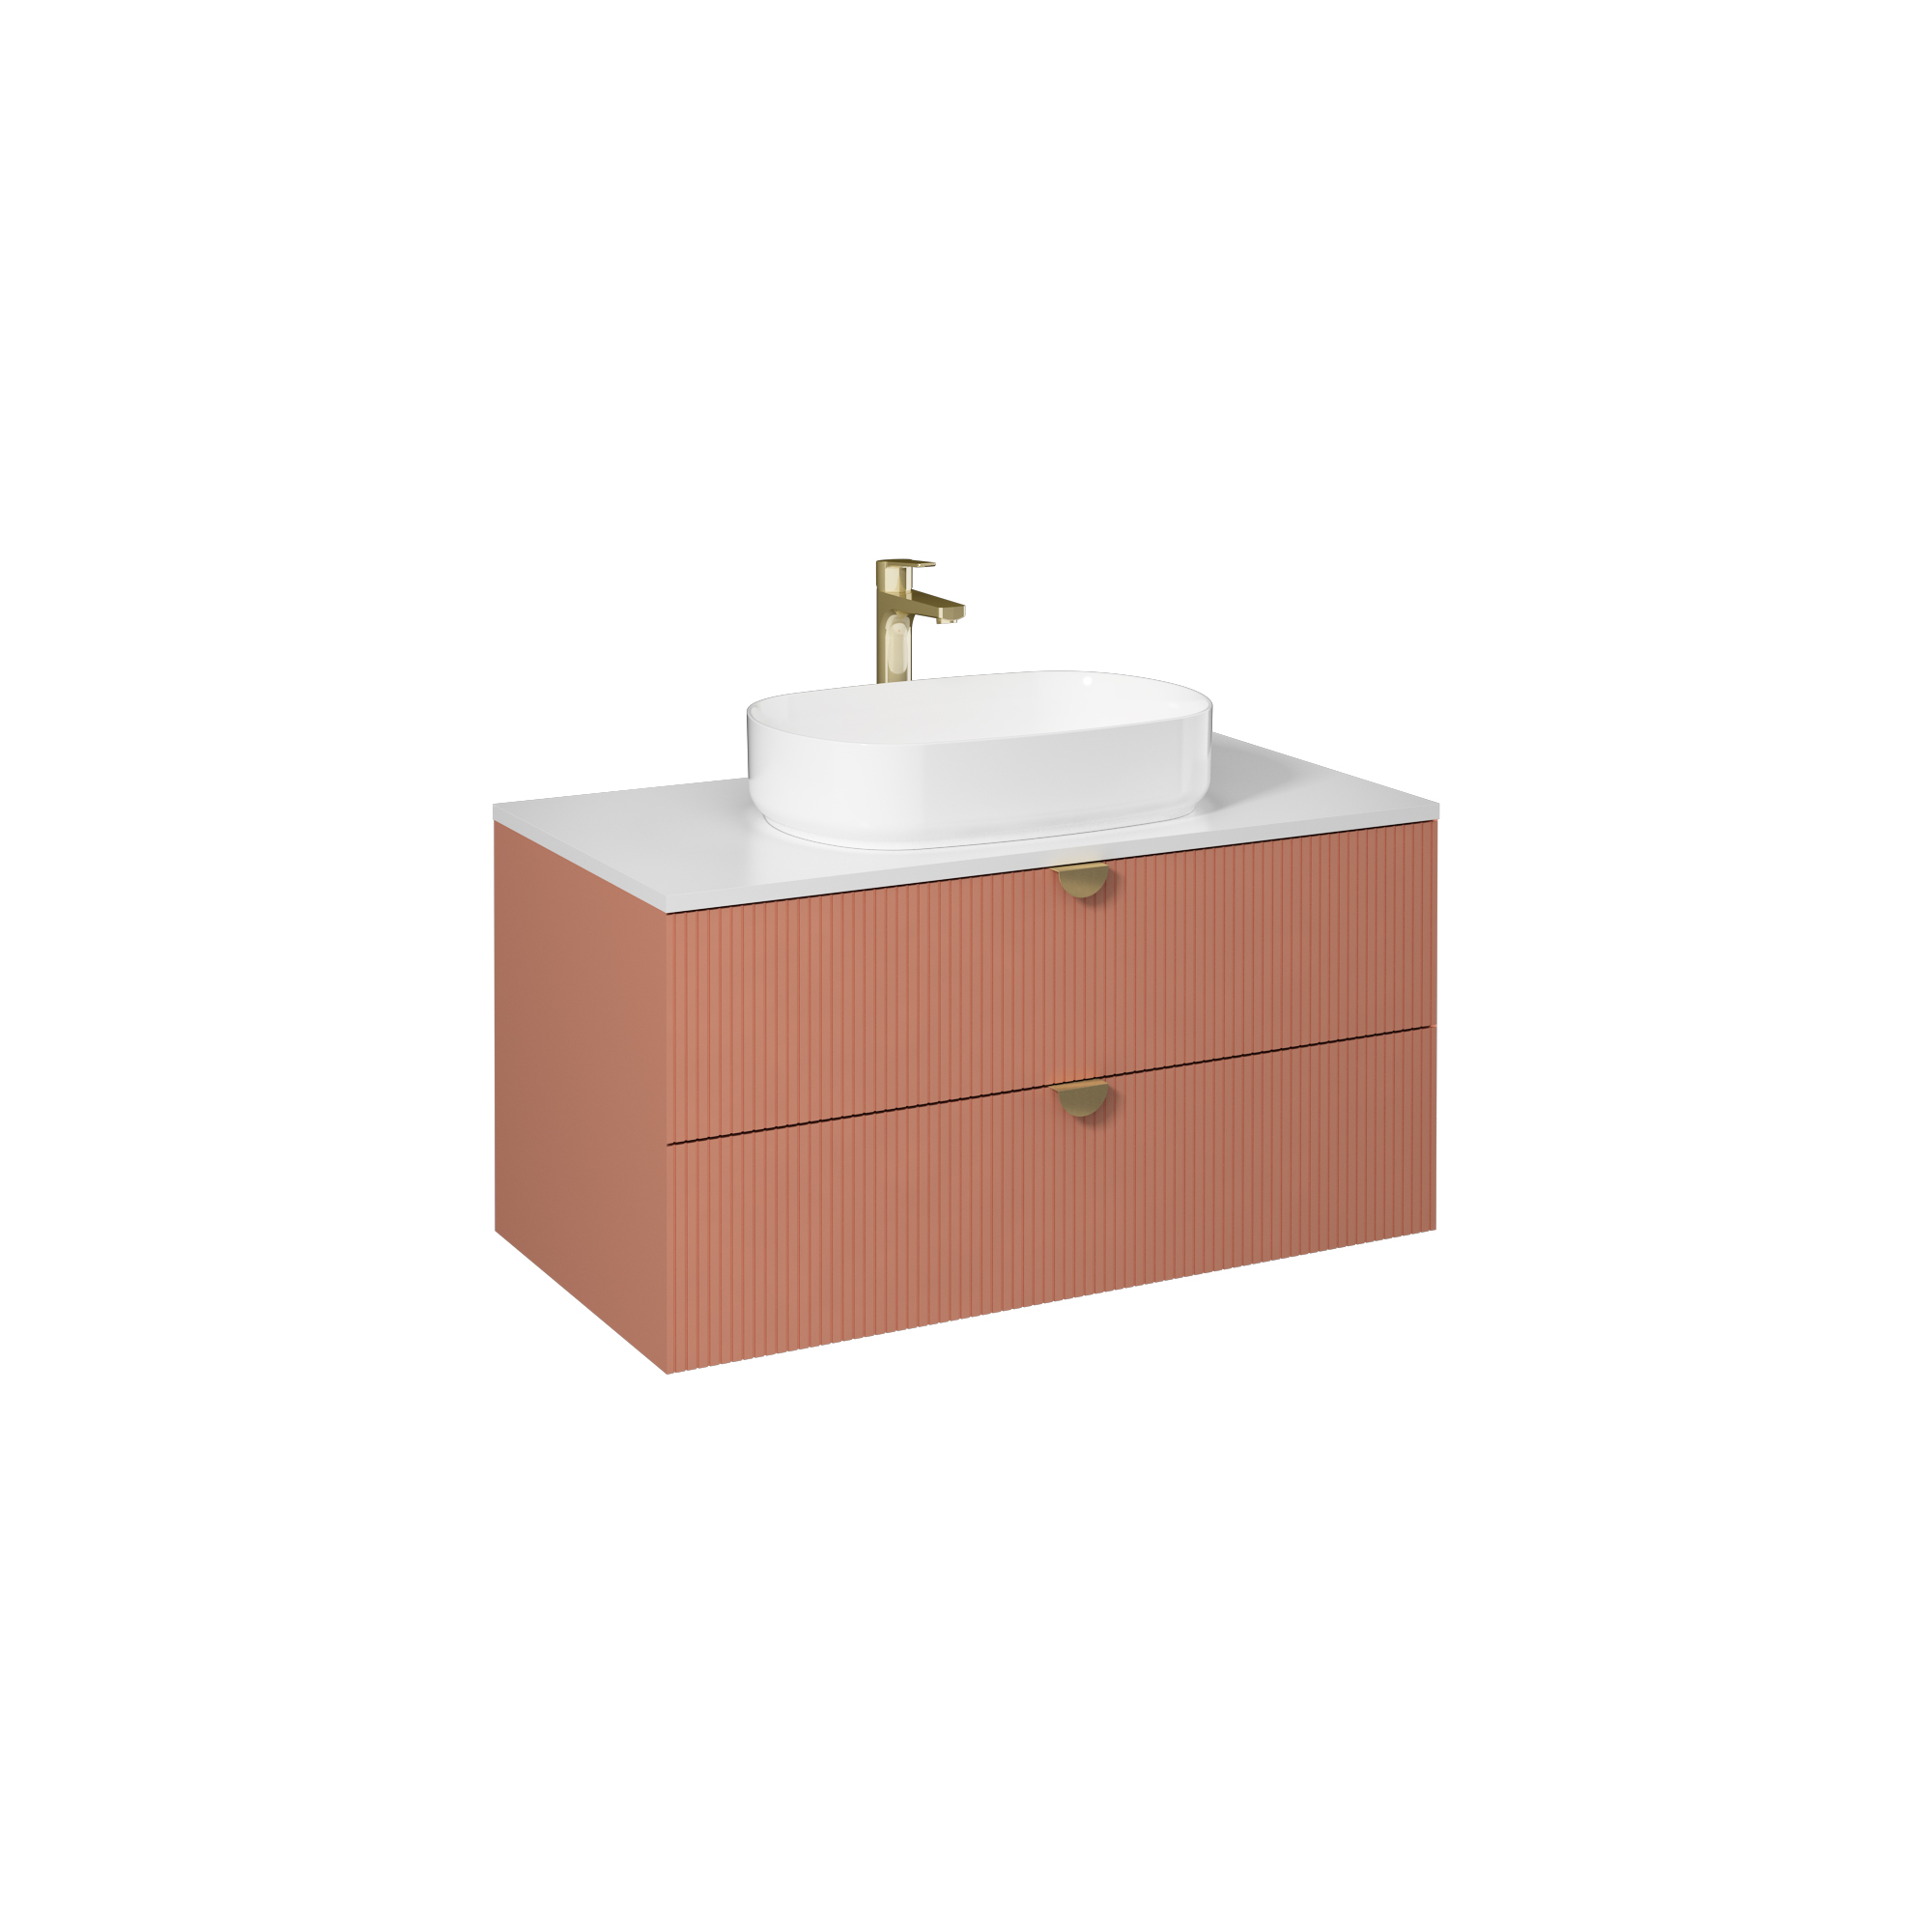 Infinity Washbasin Cabinet, Cream, with White Washbasin 51"